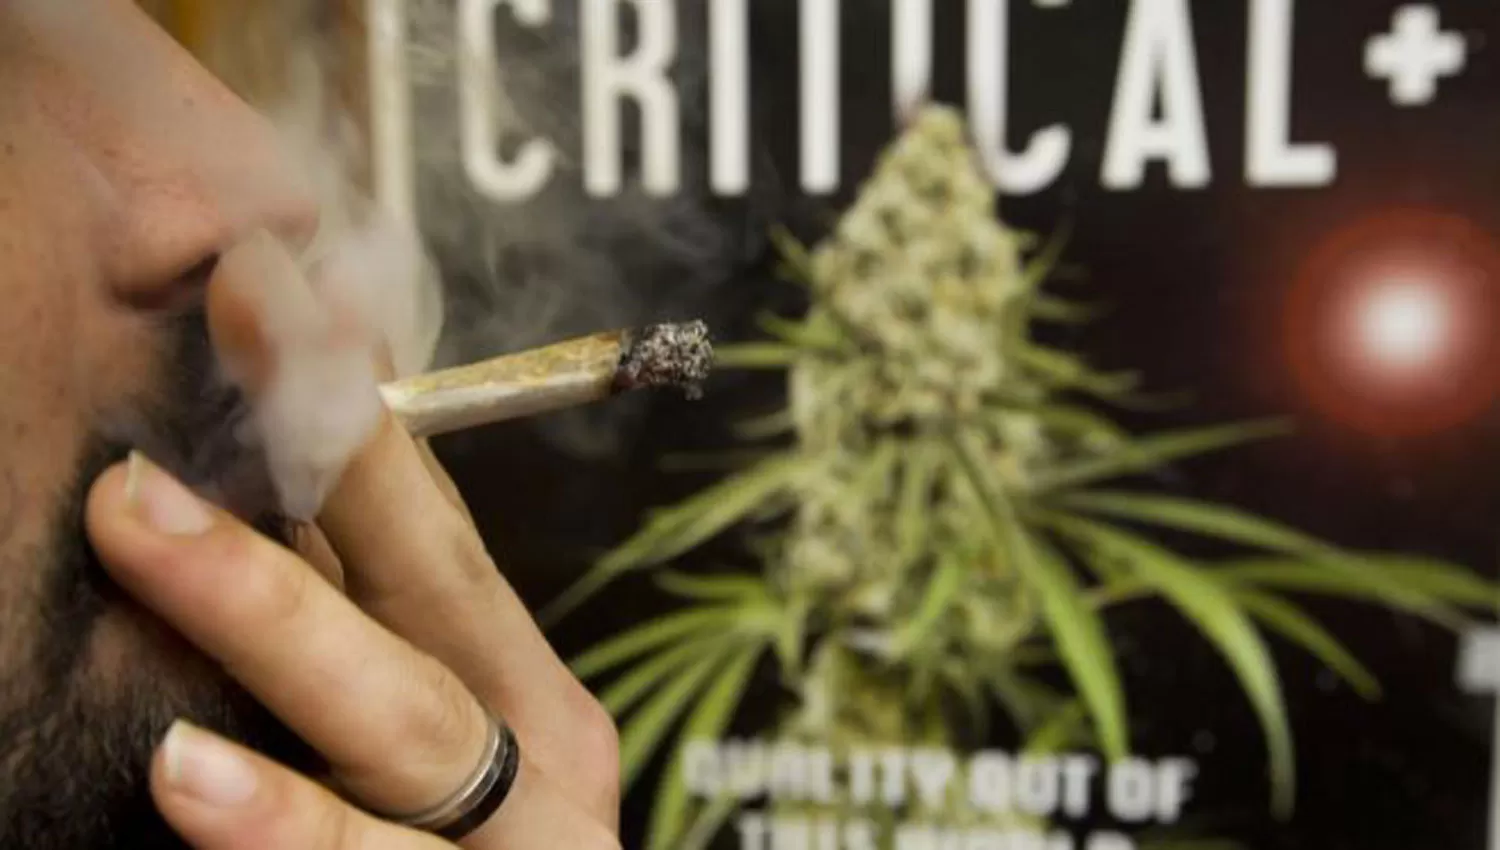 La marihuana recreacional será legal en California a partir del 1 de enero